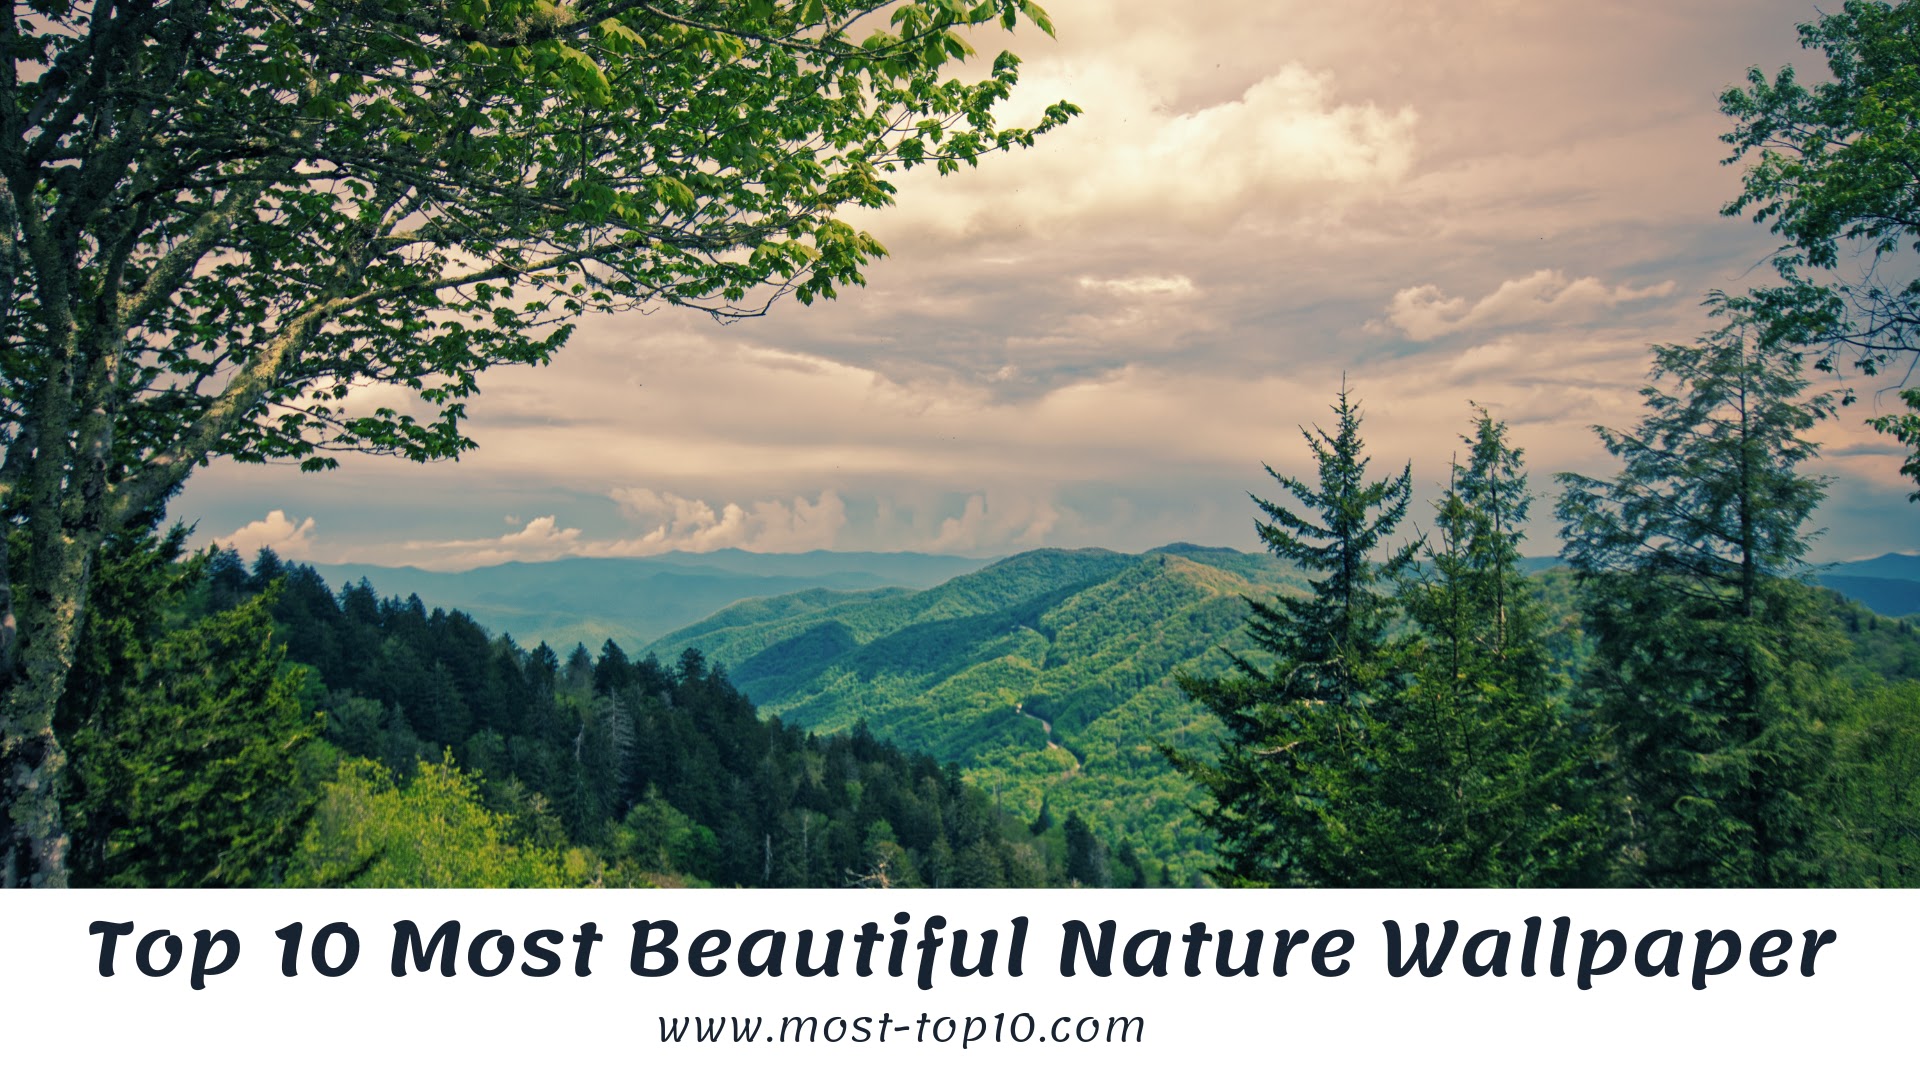 Top 10 Most Beautiful Nature Wallpaper